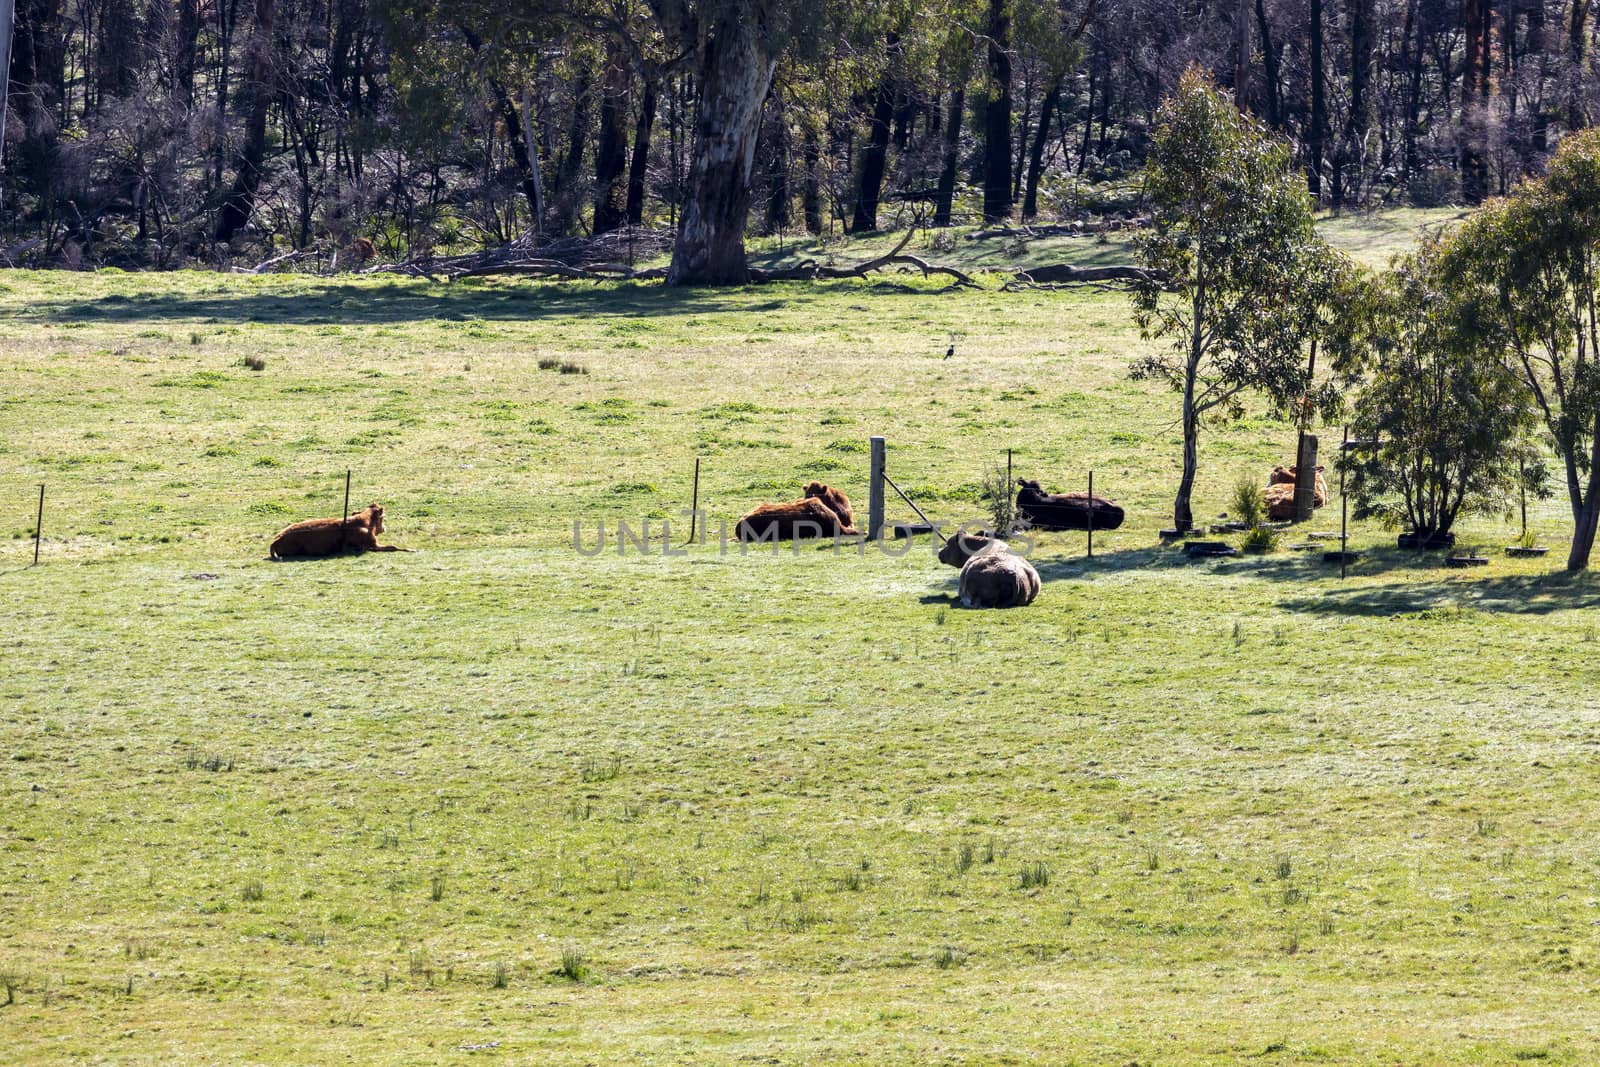 Cows grazing in a green field in regional Australia by WittkePhotos